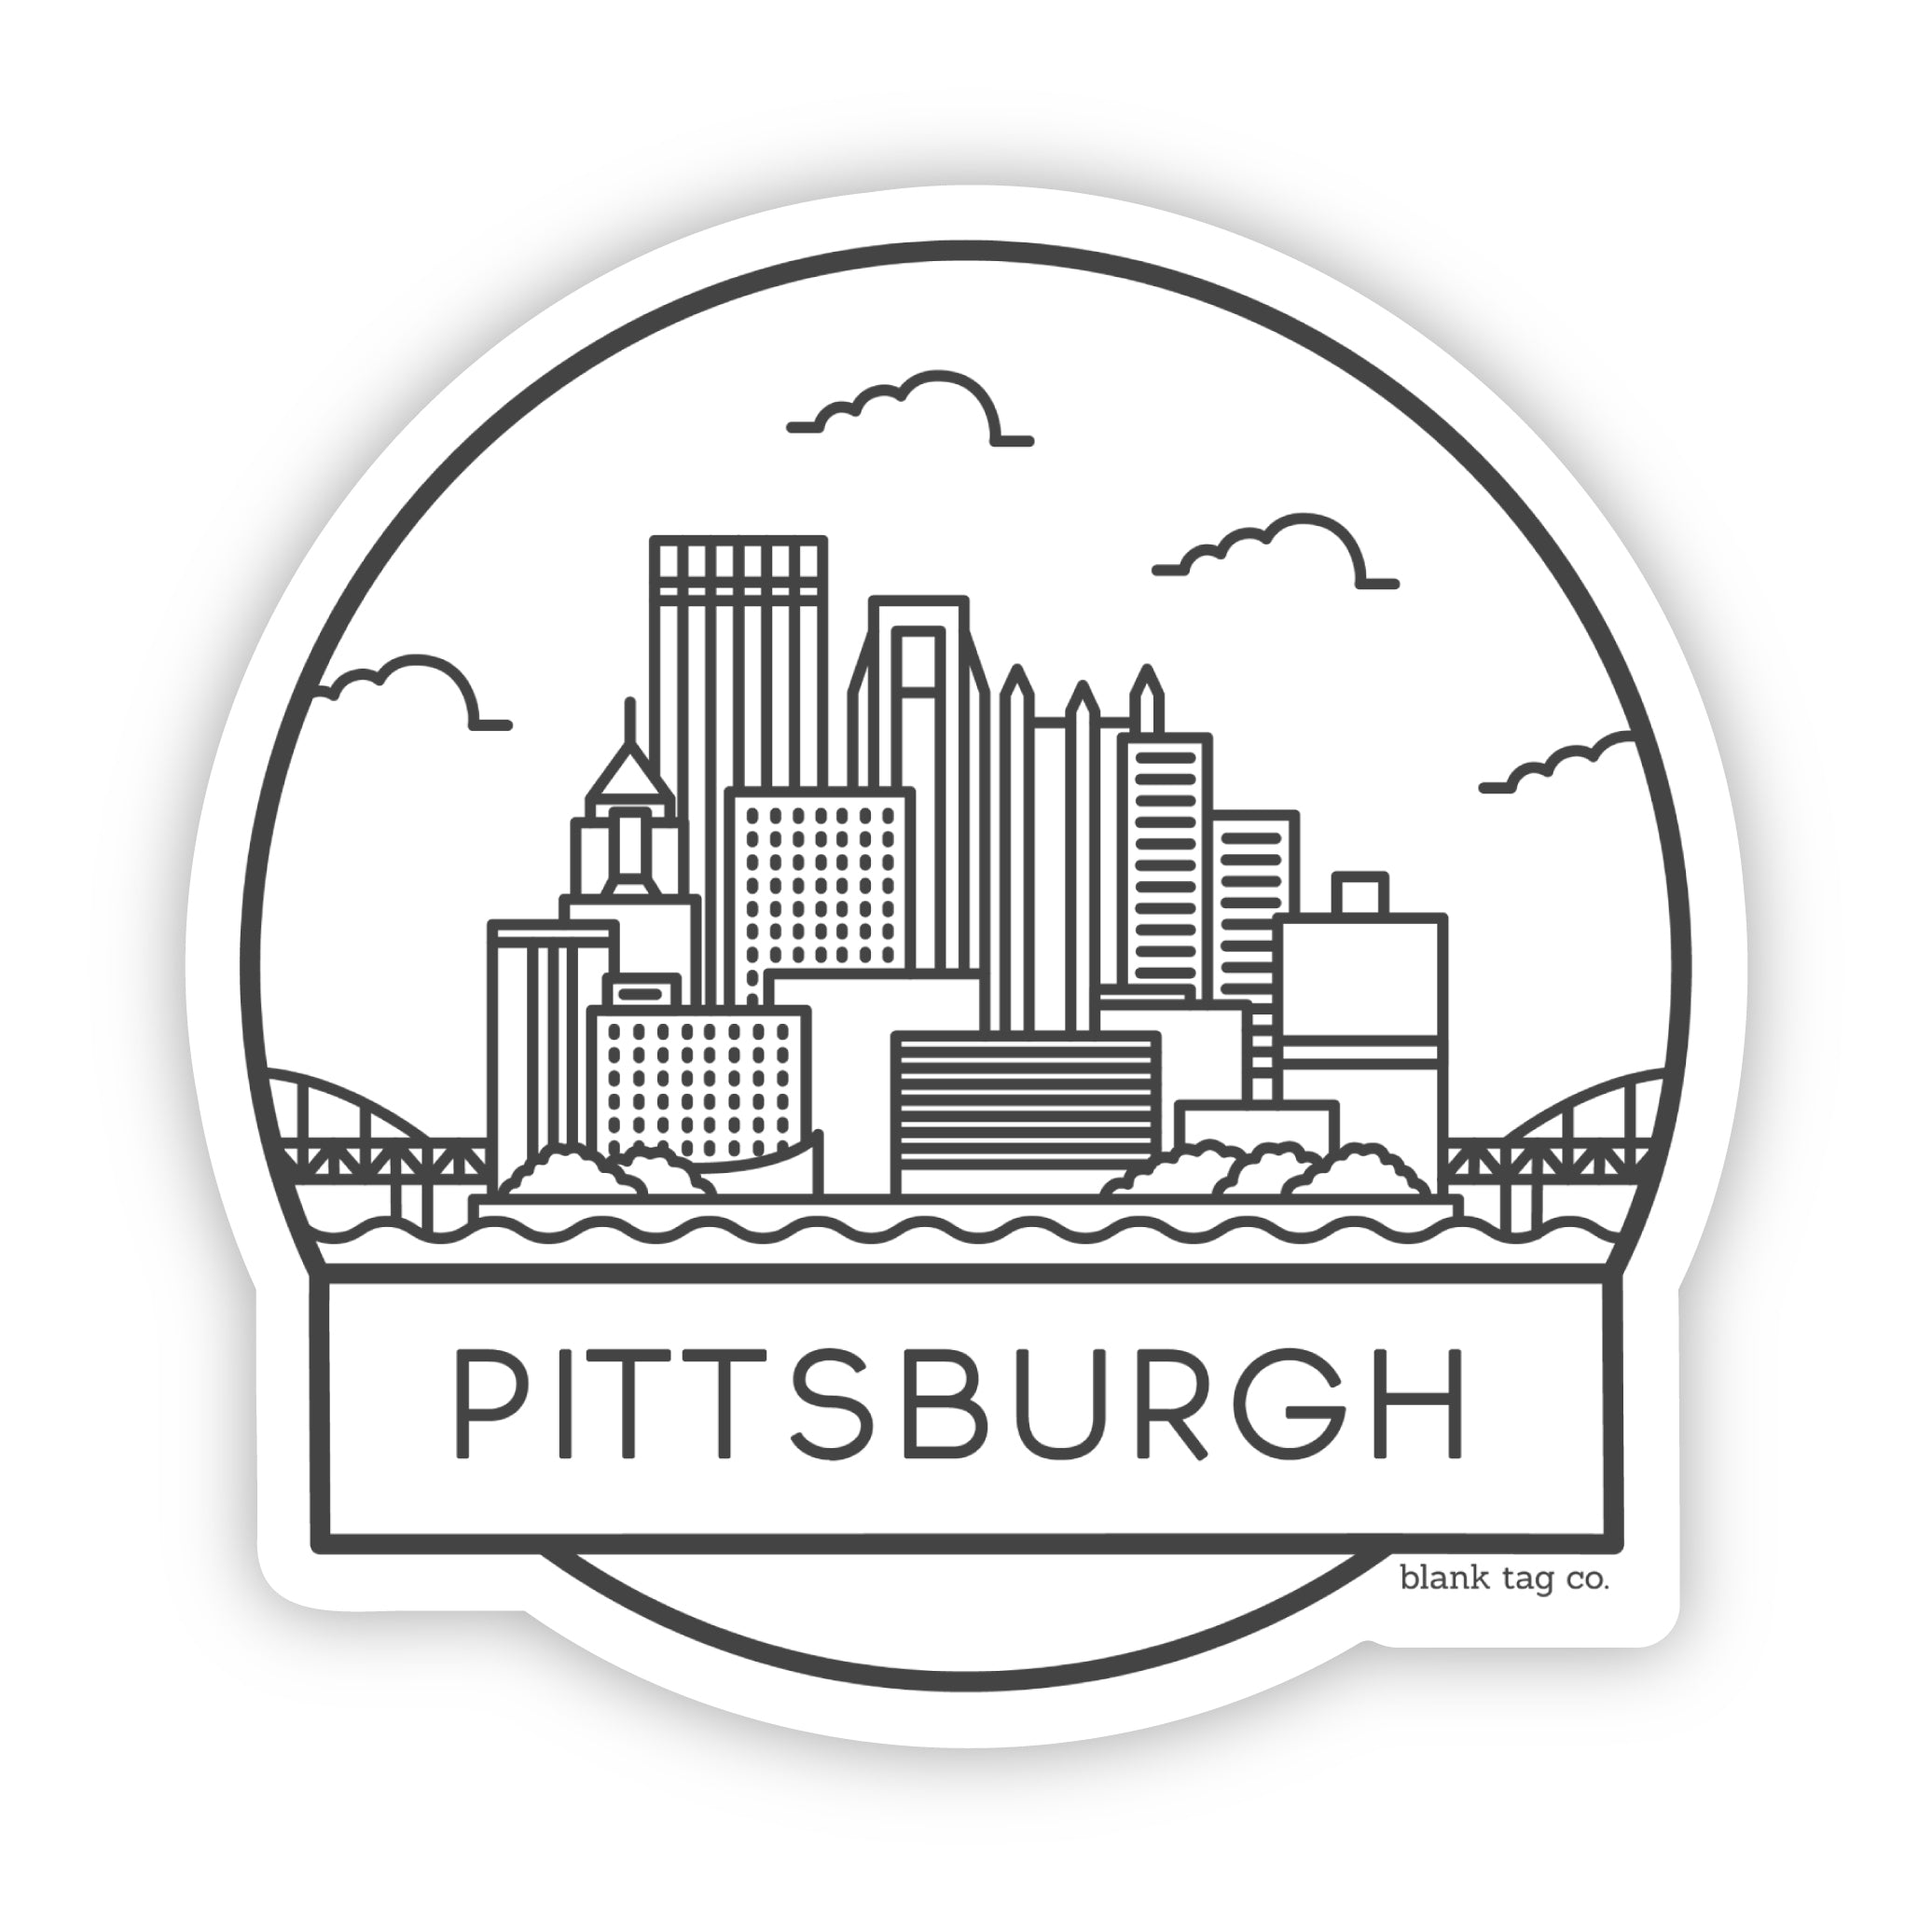 The Pittsburgh Cityscape Sticker